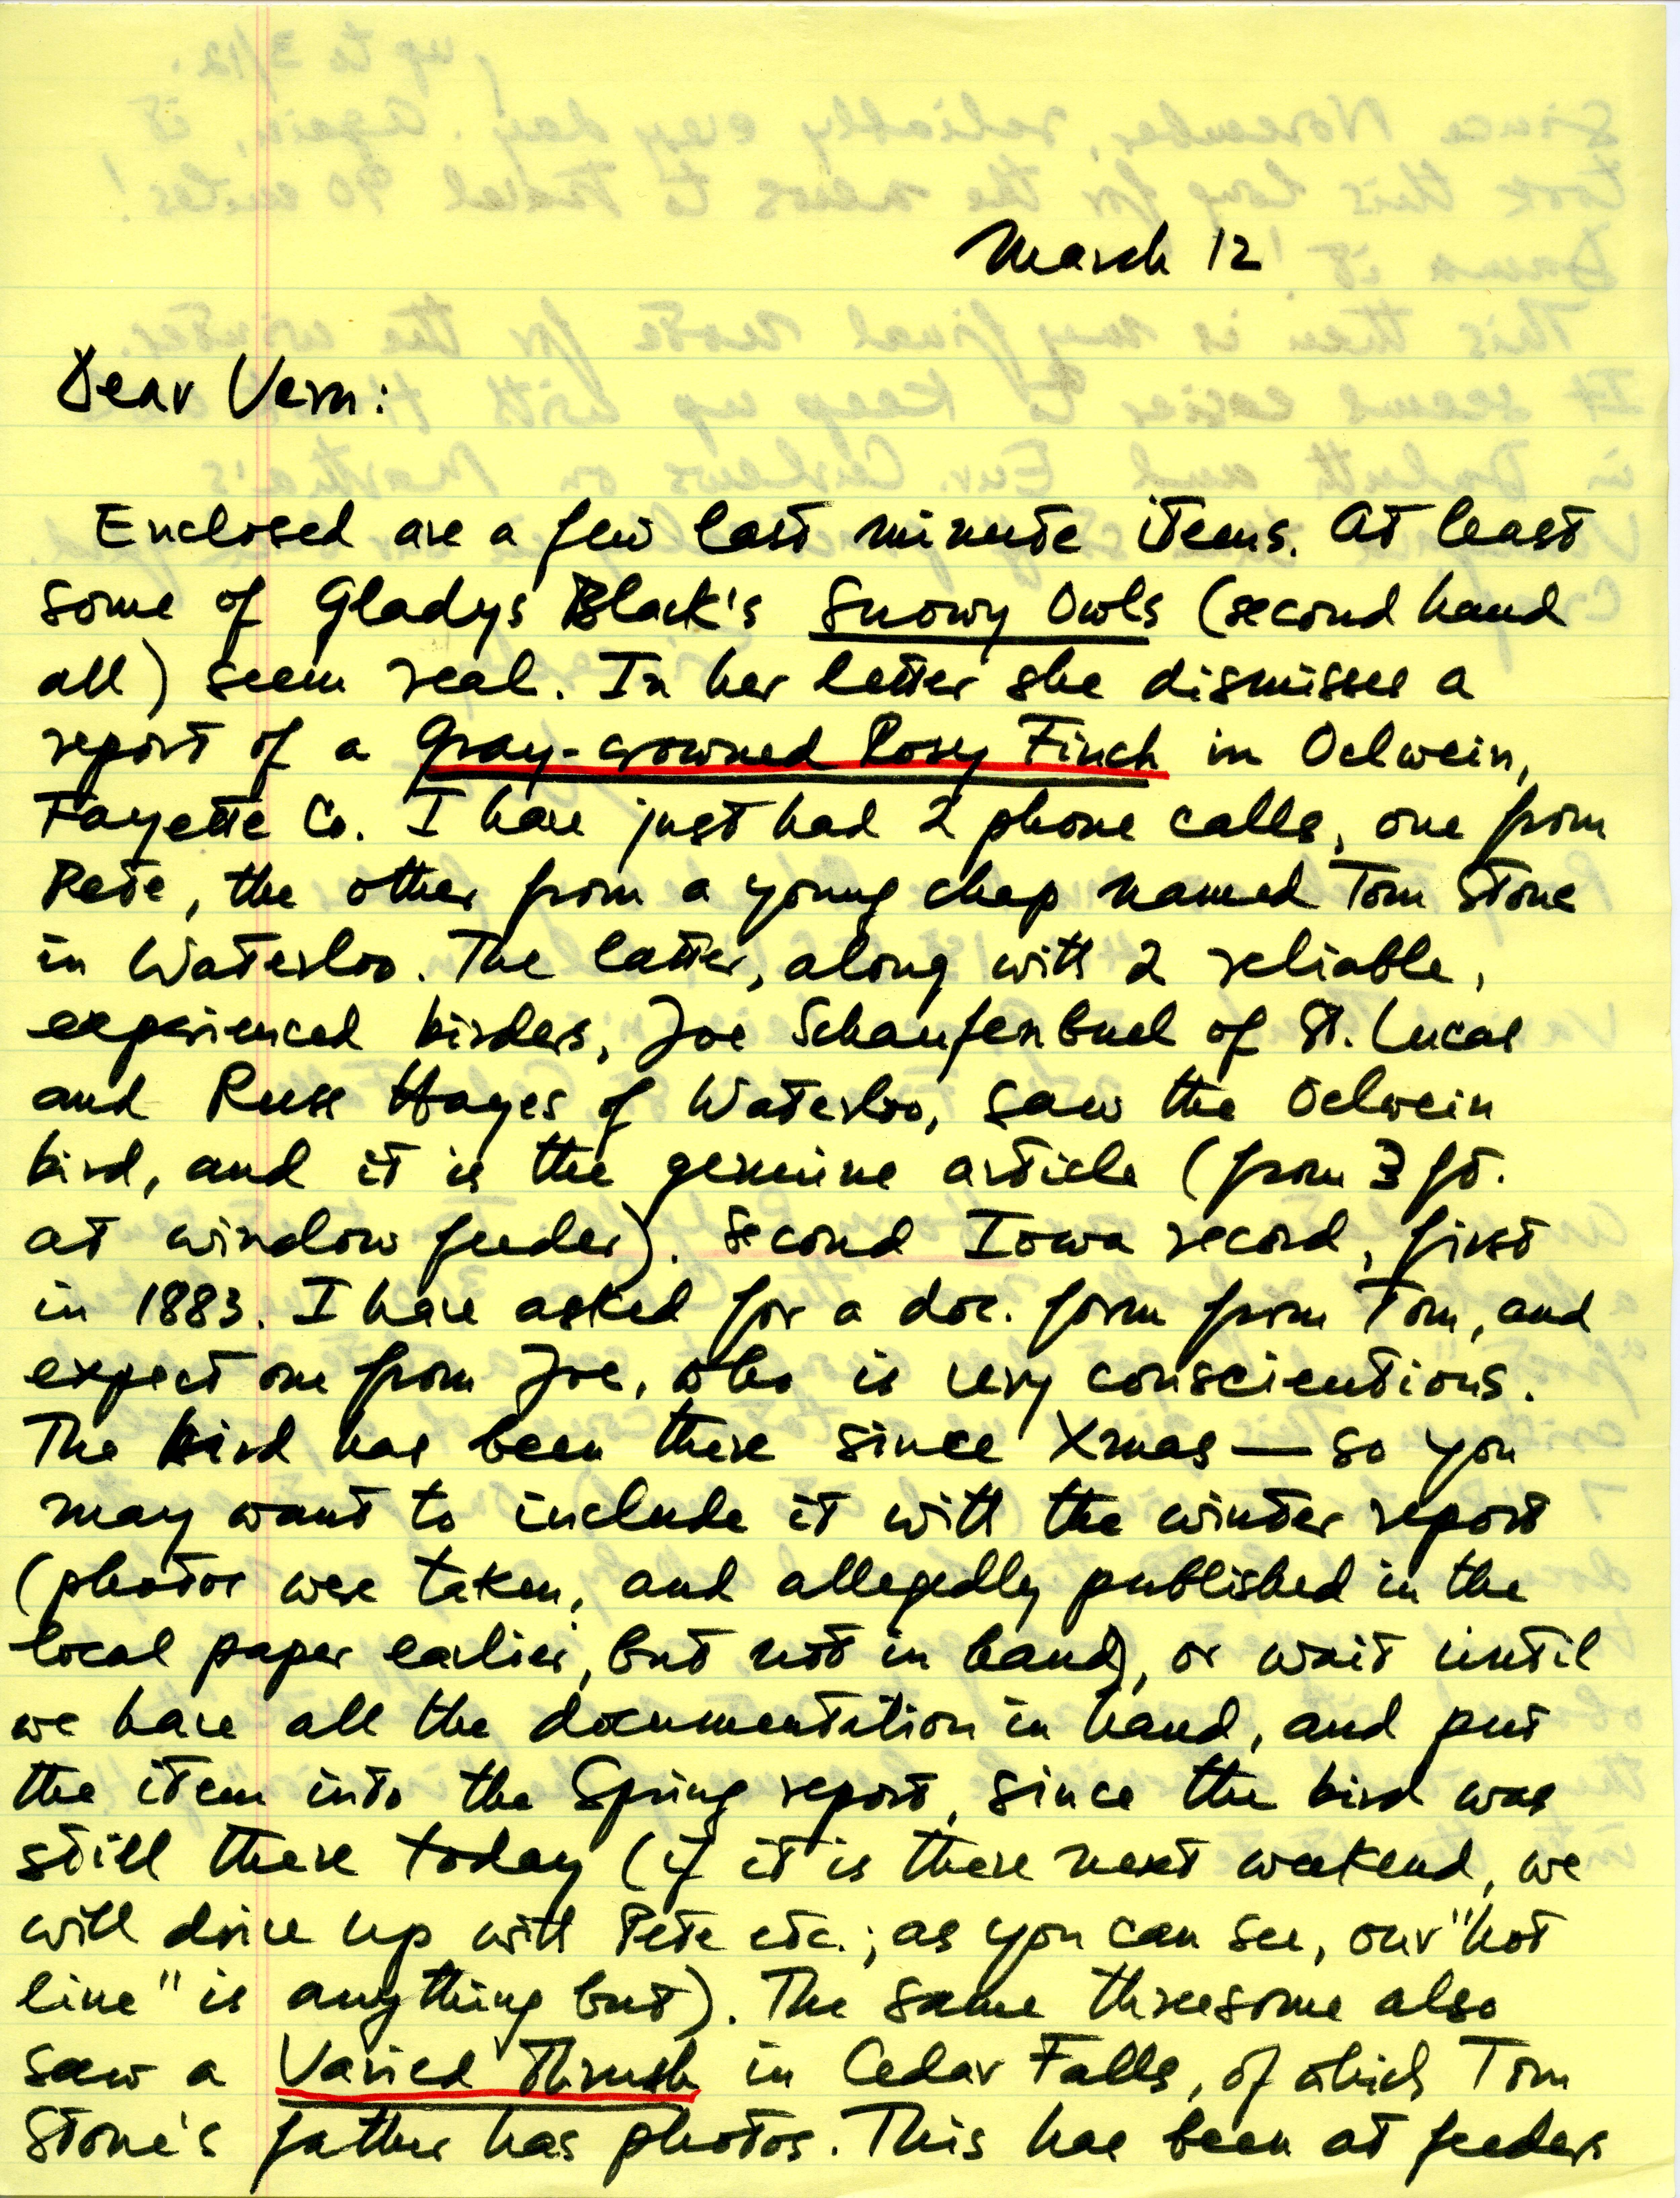  Nicholas S. Halmi letter to Vernon M. Kleen regarding bird sightings, March 12, 1978